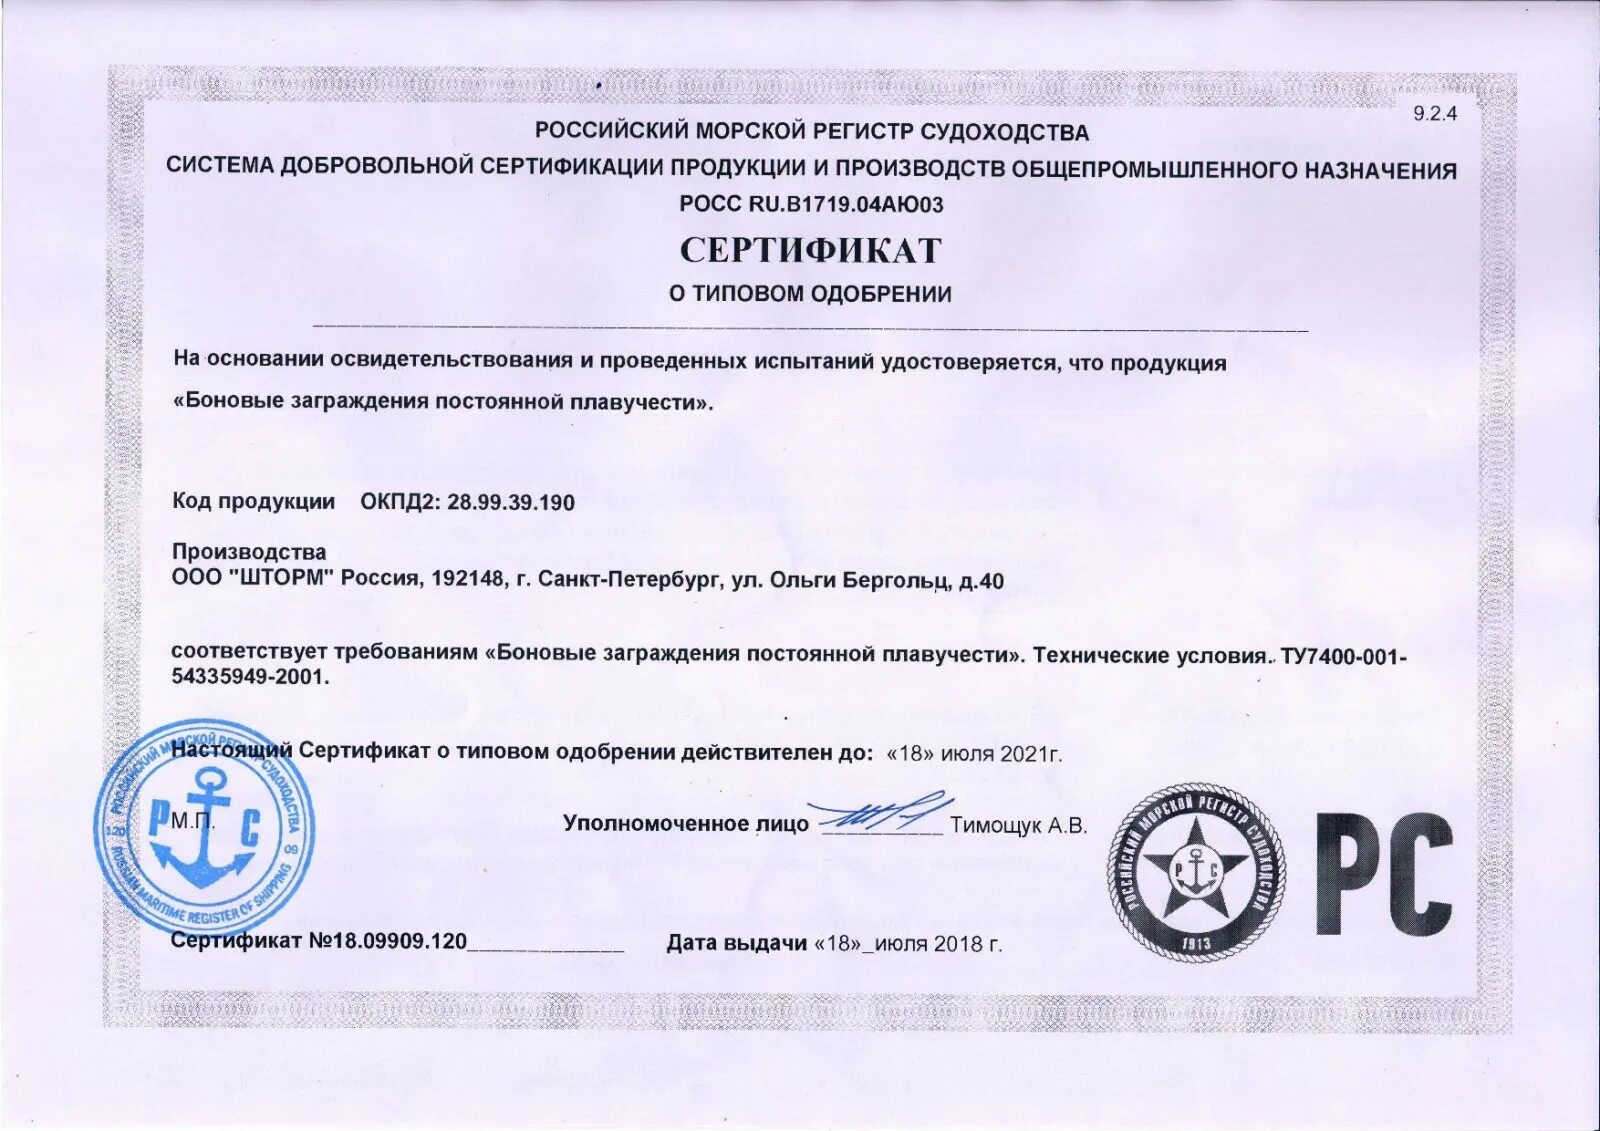 Сертификат морской РМРС. Сертификат морского регистра. Сертификат морского регистра судоходства. Сертификат российского морского регистра.